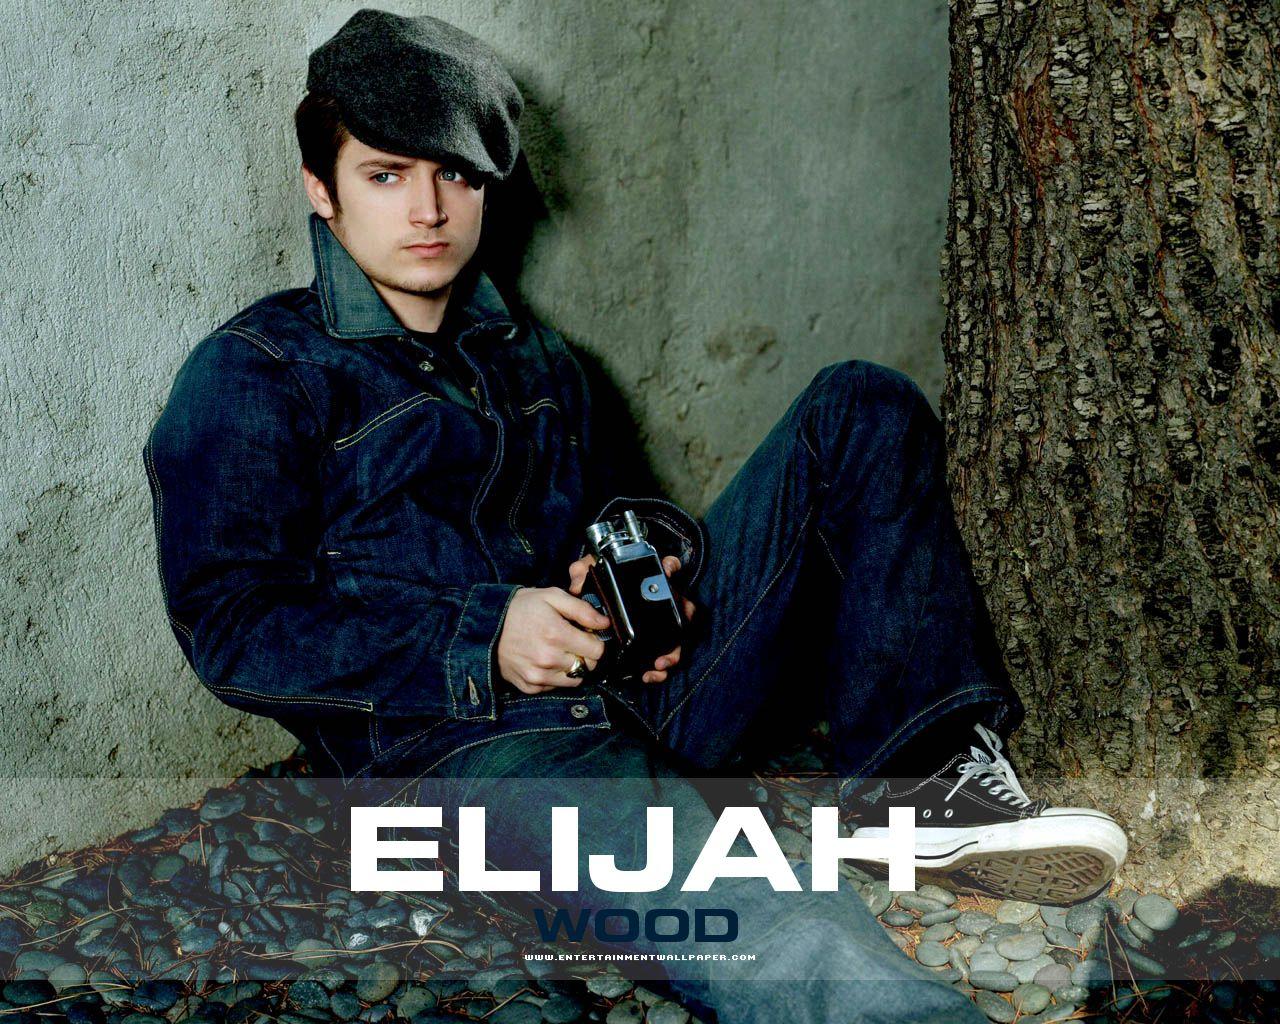 Elijah Wood image Elijah Wood HD wallpaper and background photo